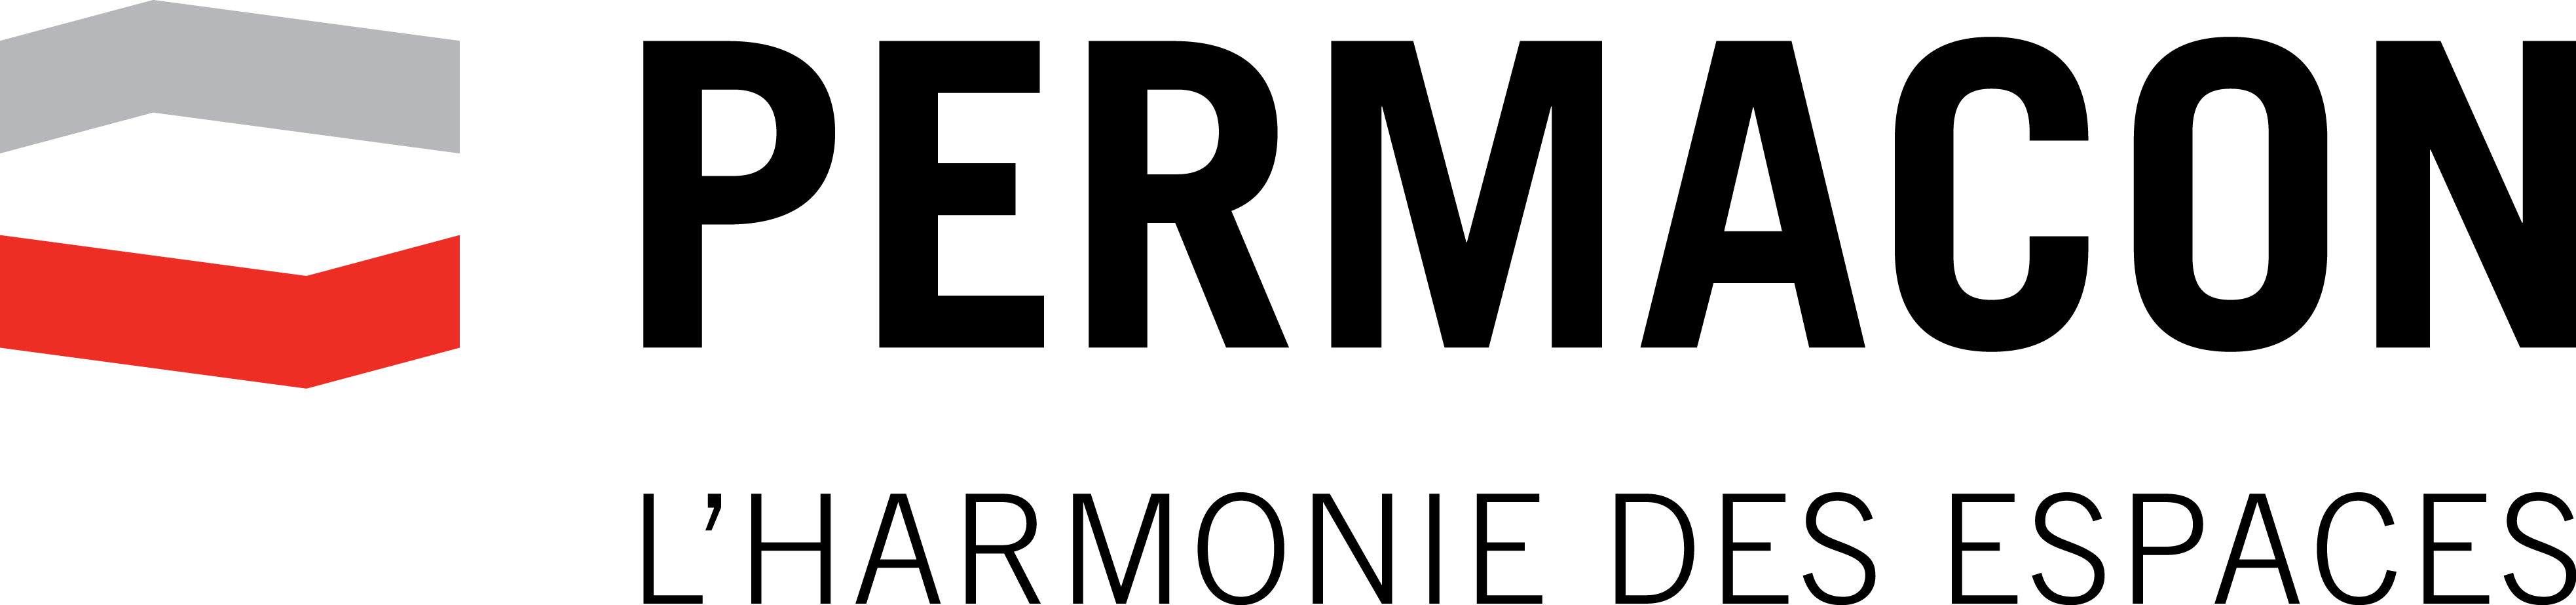 permacon logo